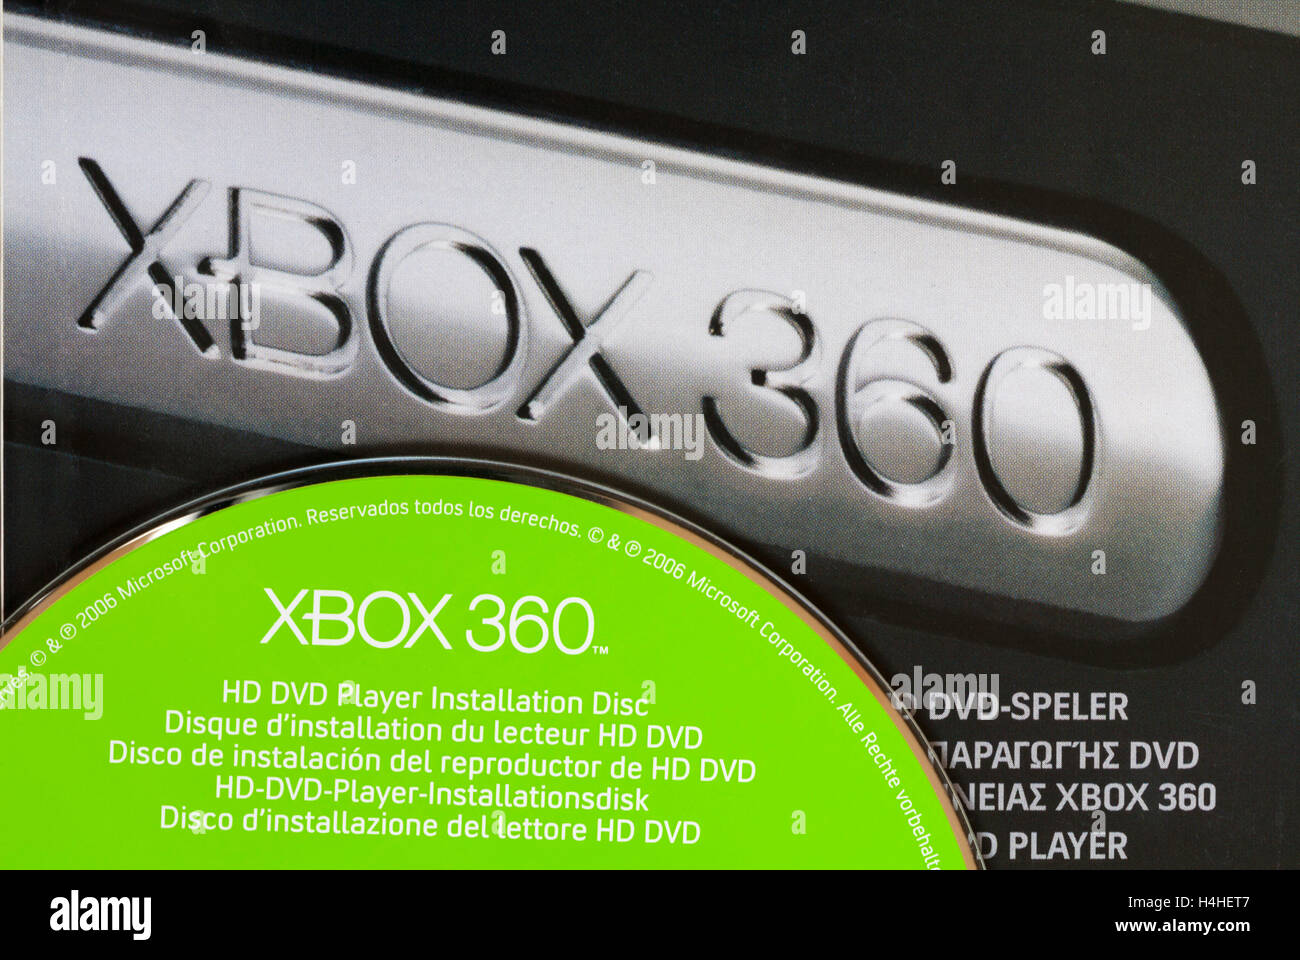 Xbox 360 HD DVD player installation disc on box Stock Photo - Alamy